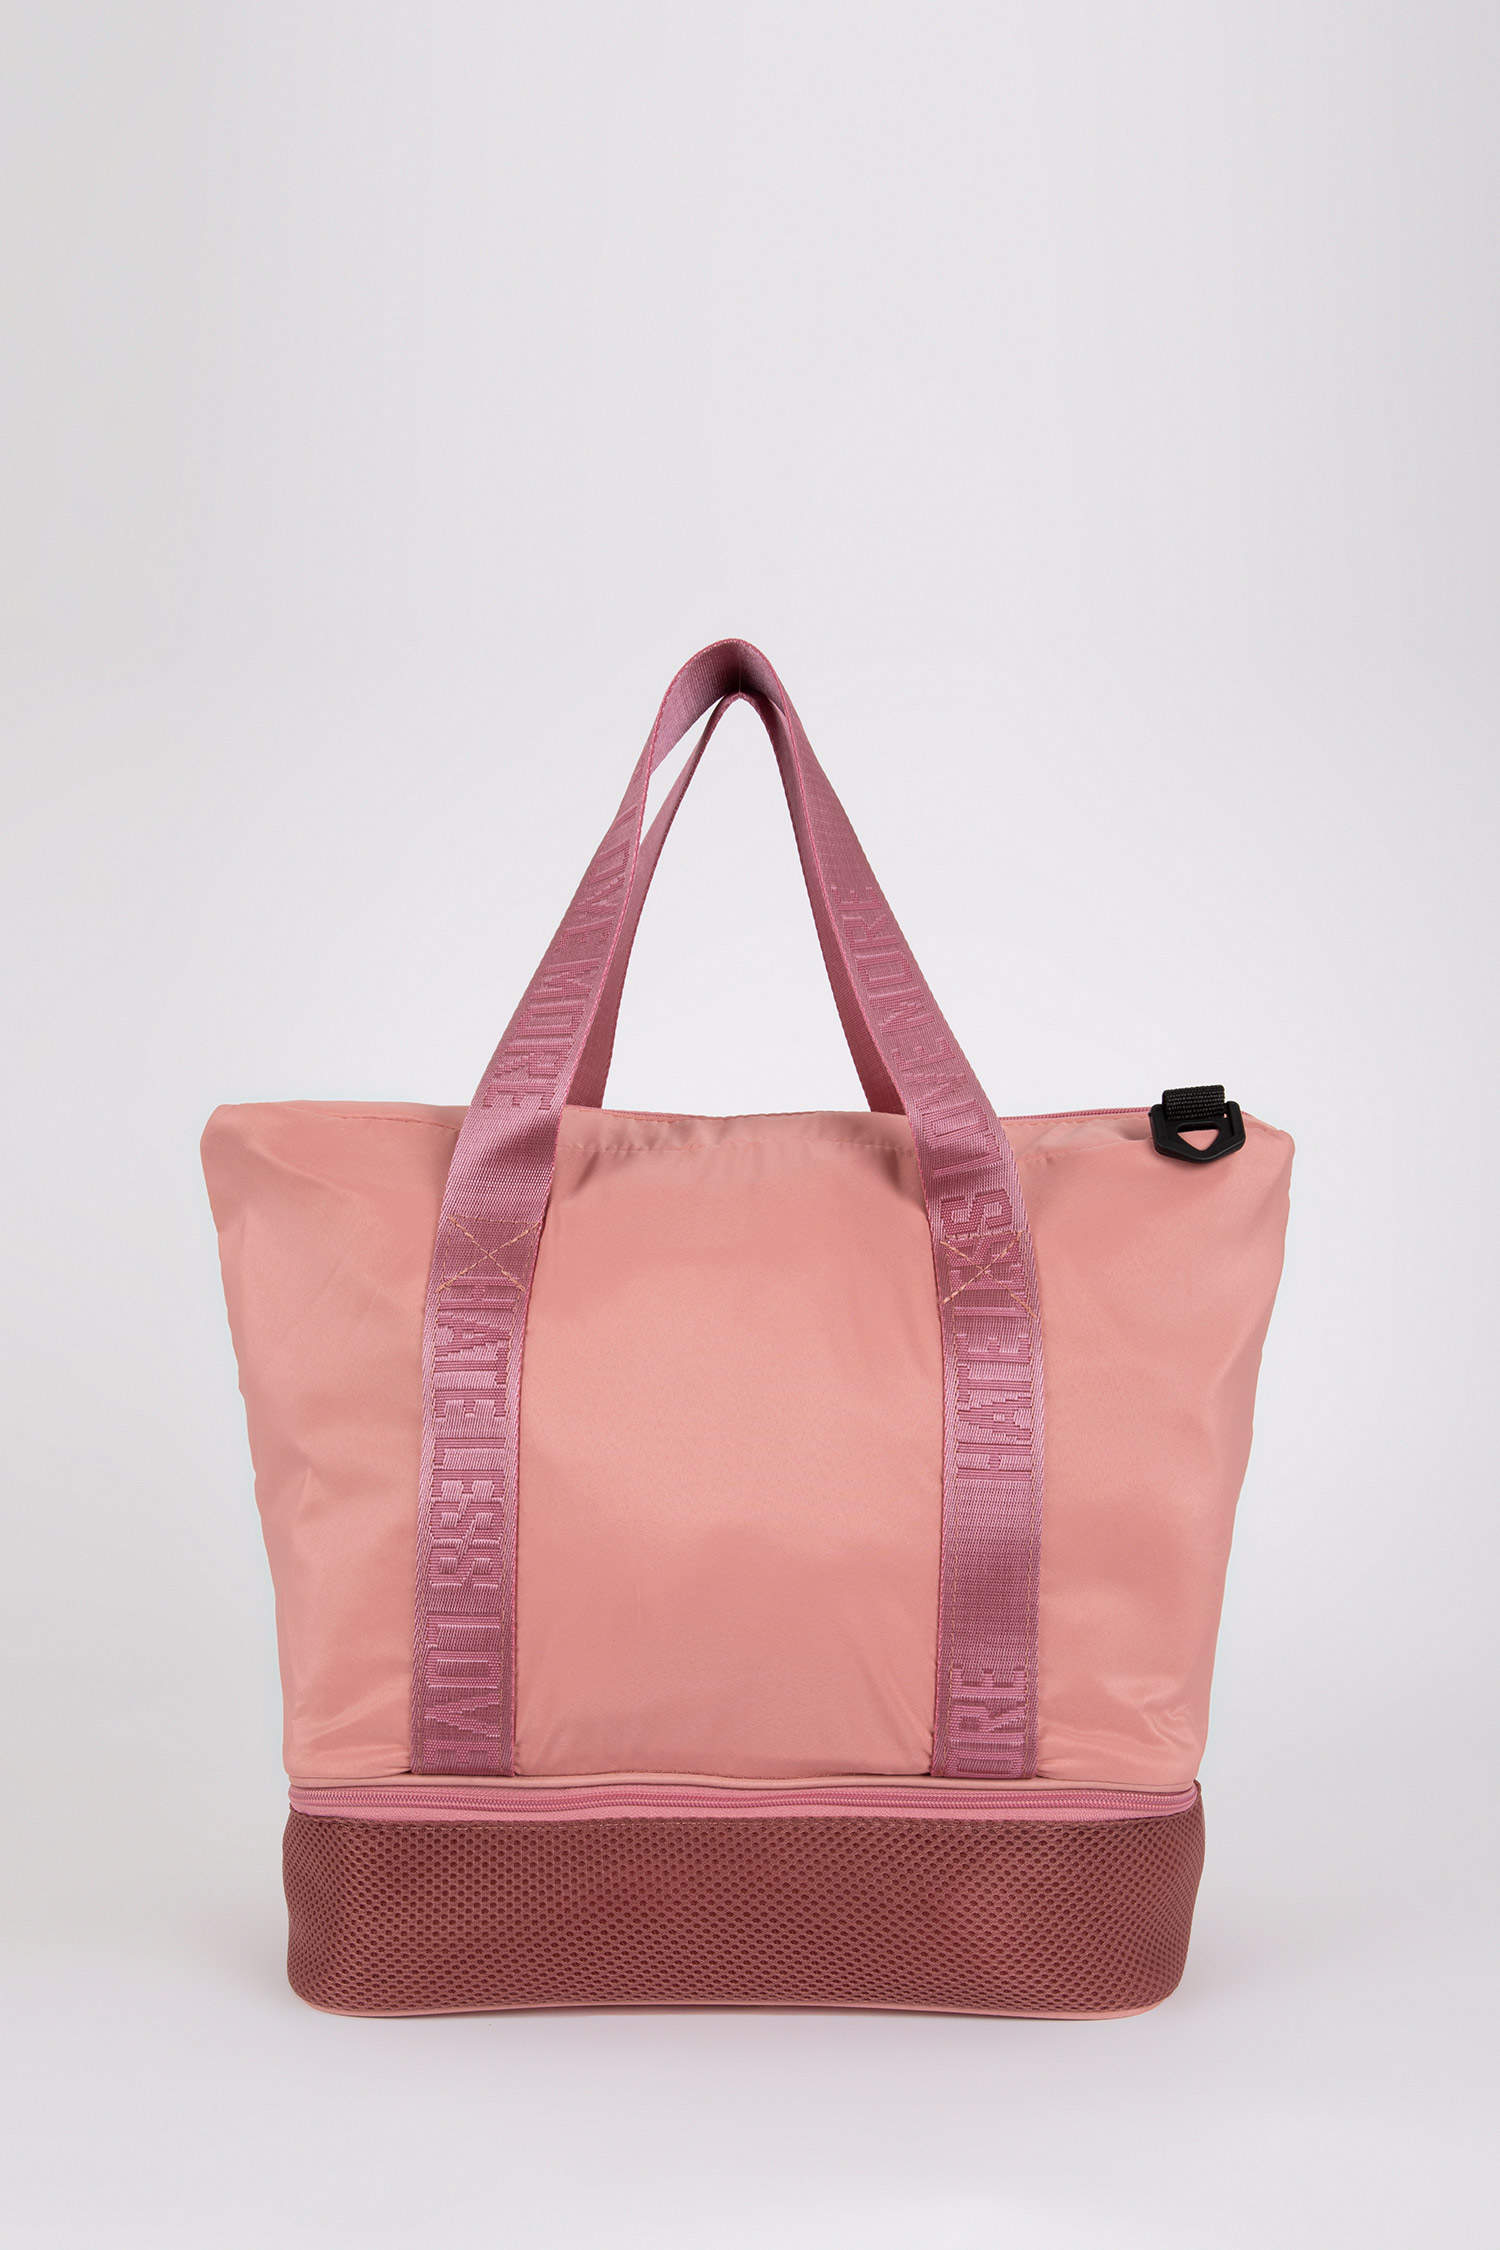 Look for Love Pink Handbag